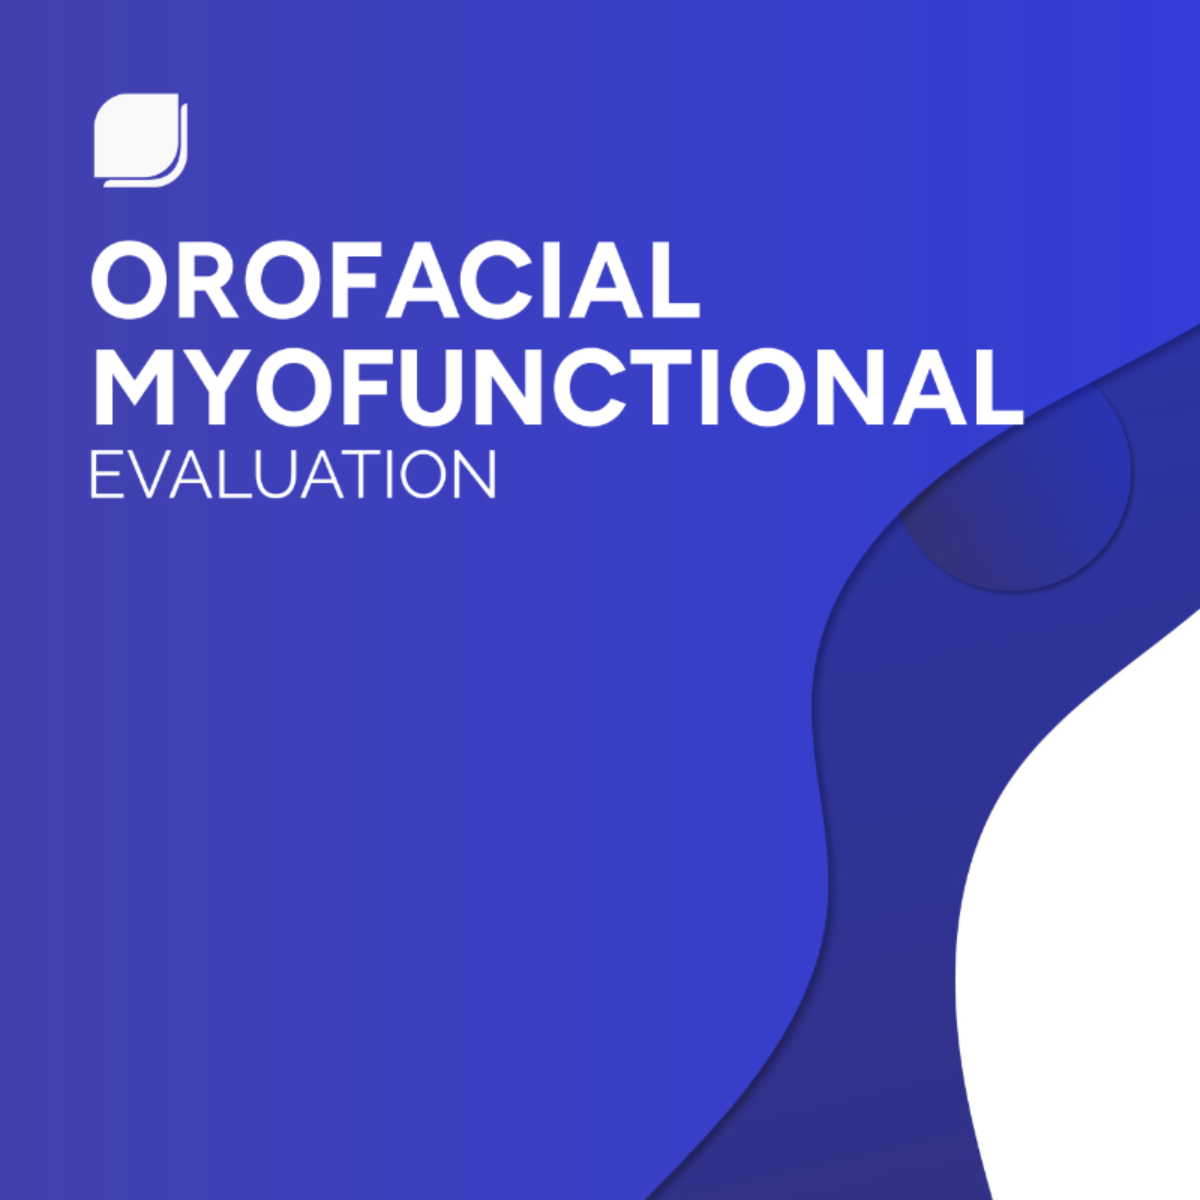 Orofacial Myofunctional Evaluation Template